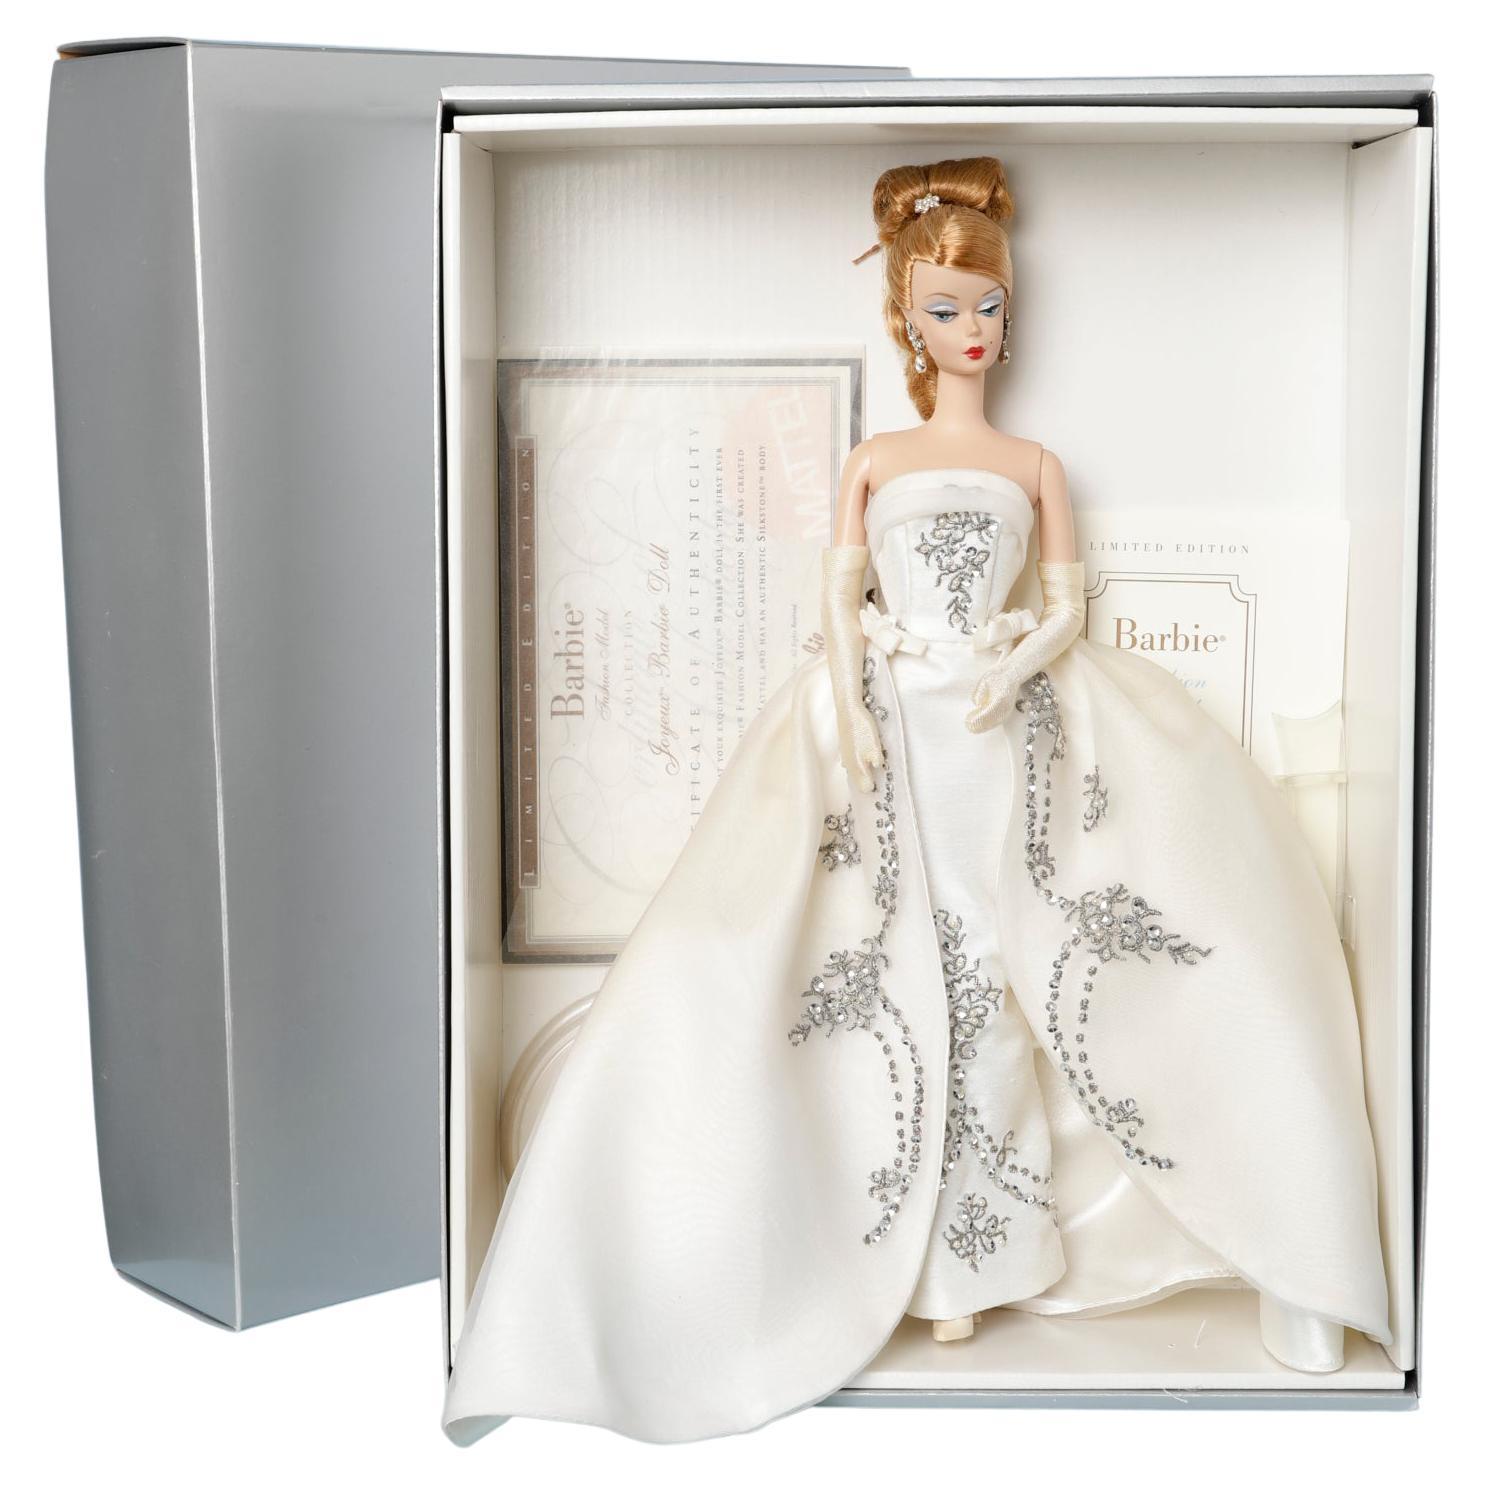 Barbie Fashion Model / "Joyeux" / Limited Edition For Sale at 1stDibs